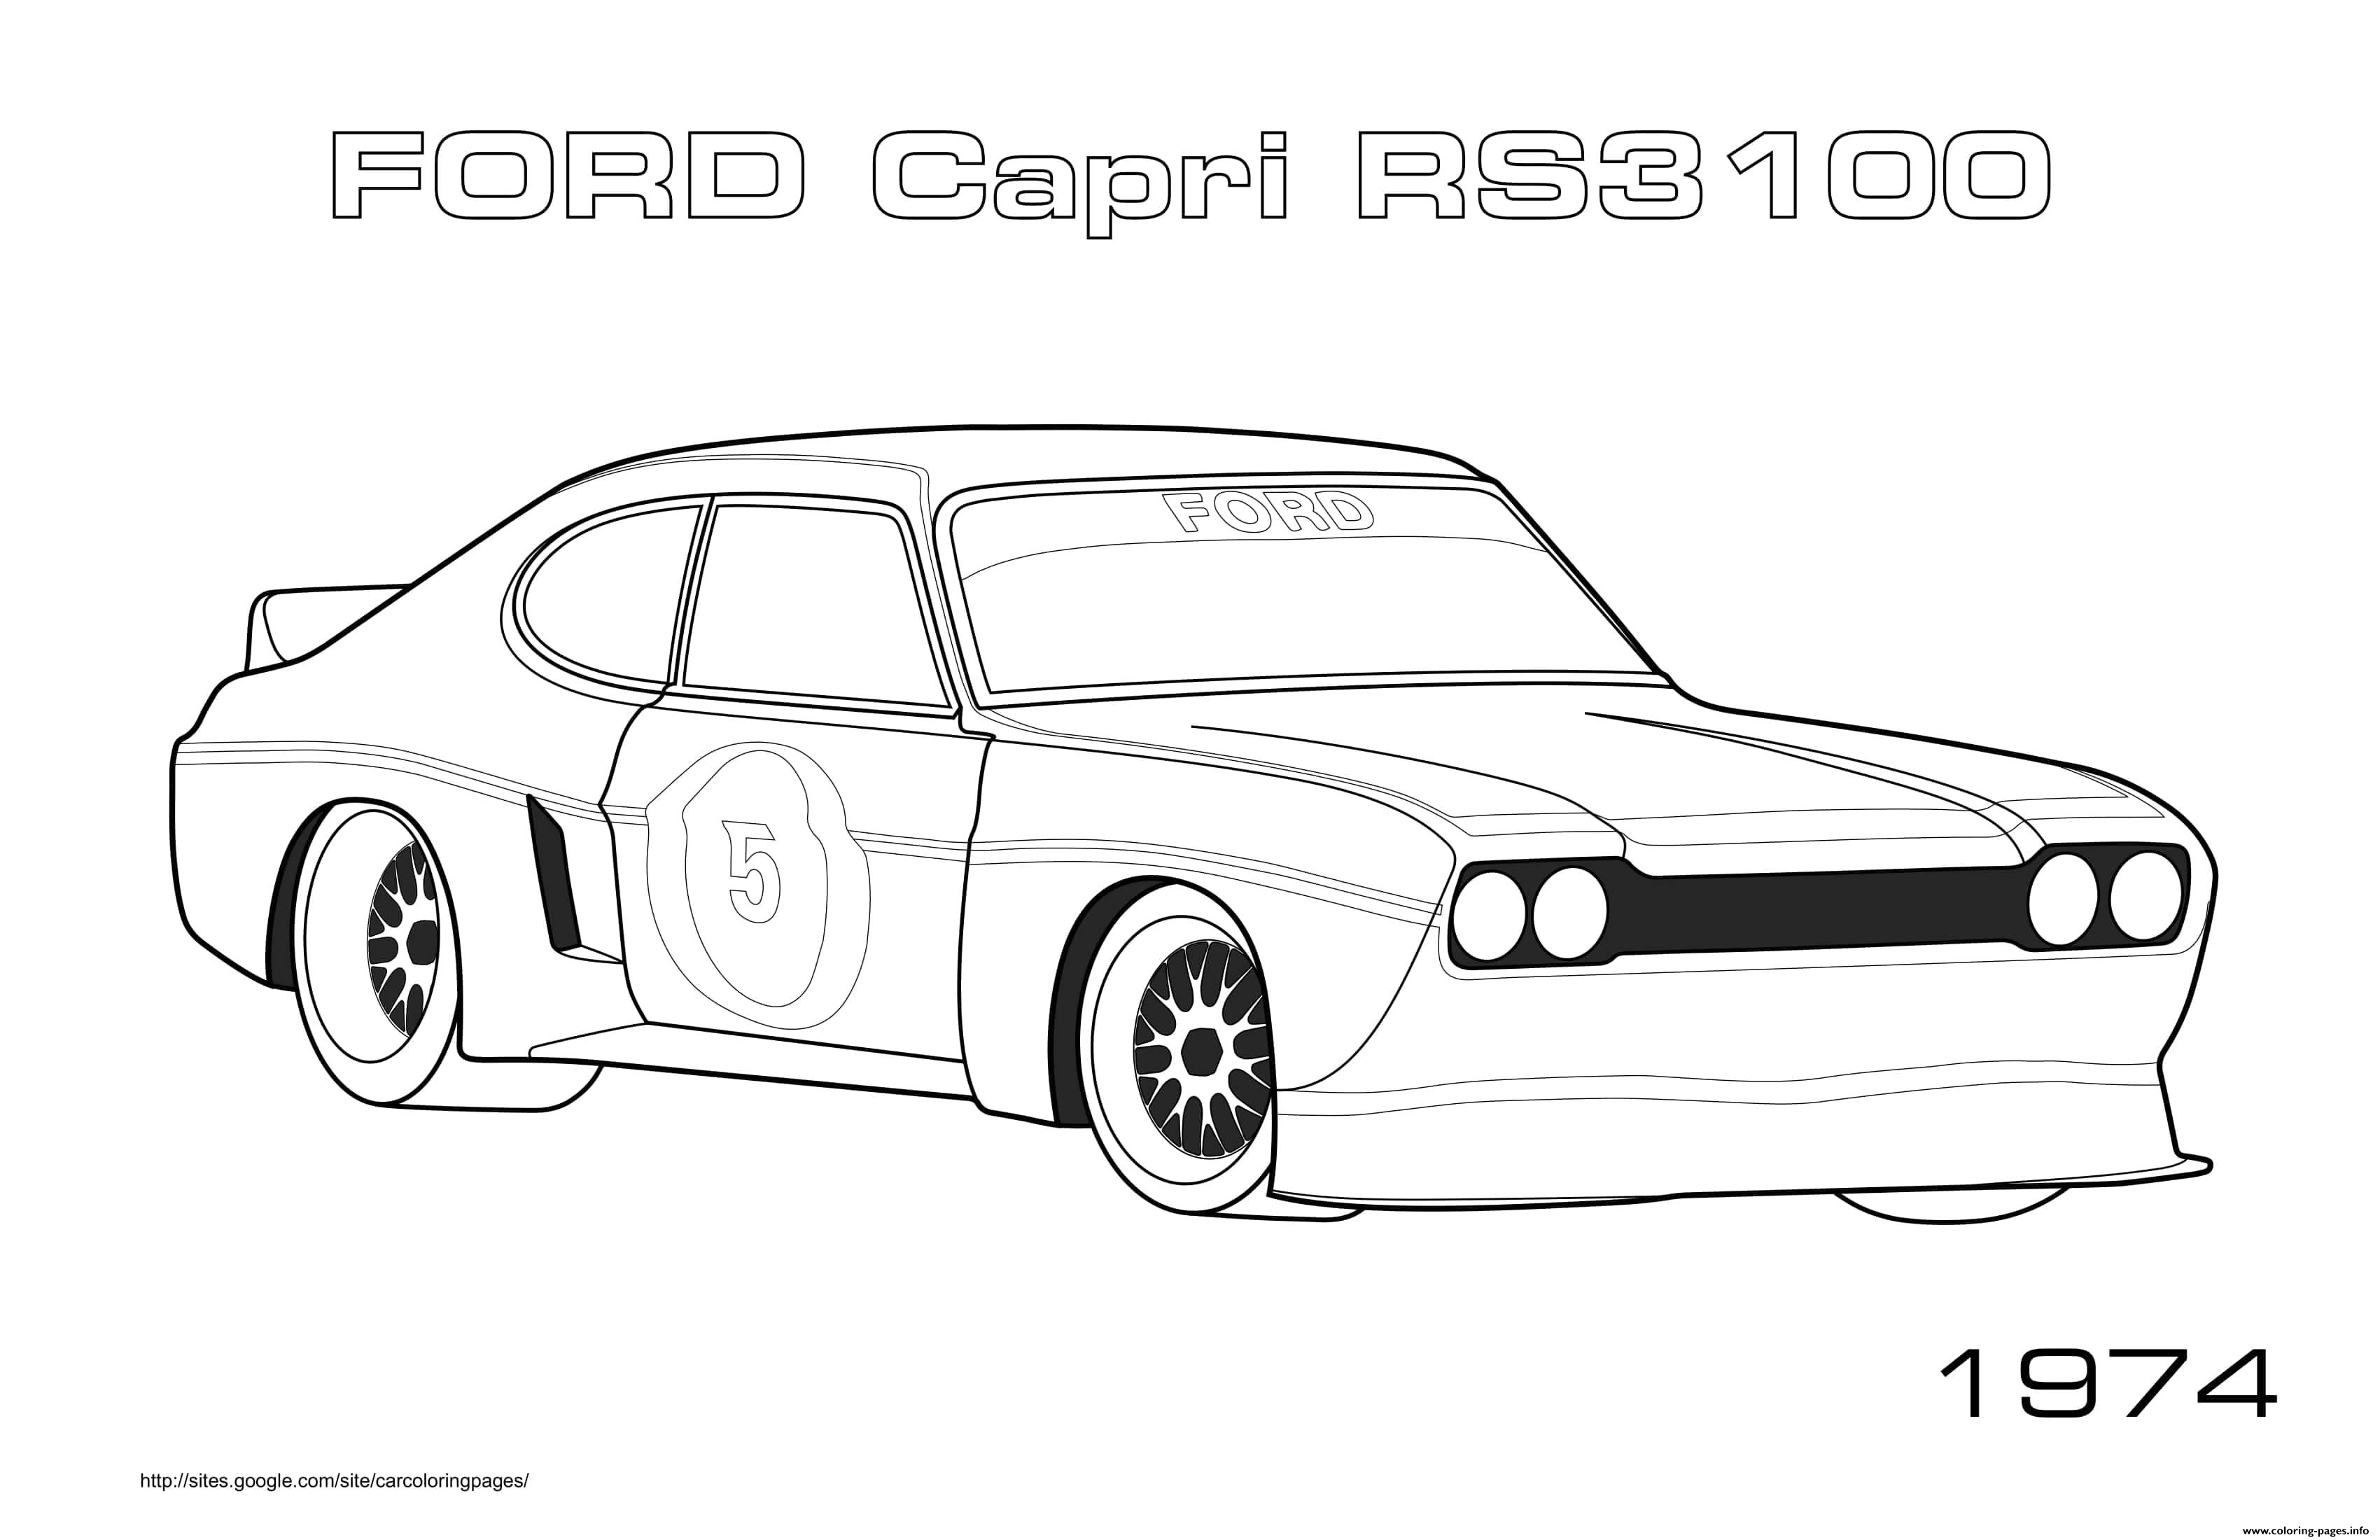 Ford Capri Rs3100 1974 coloring